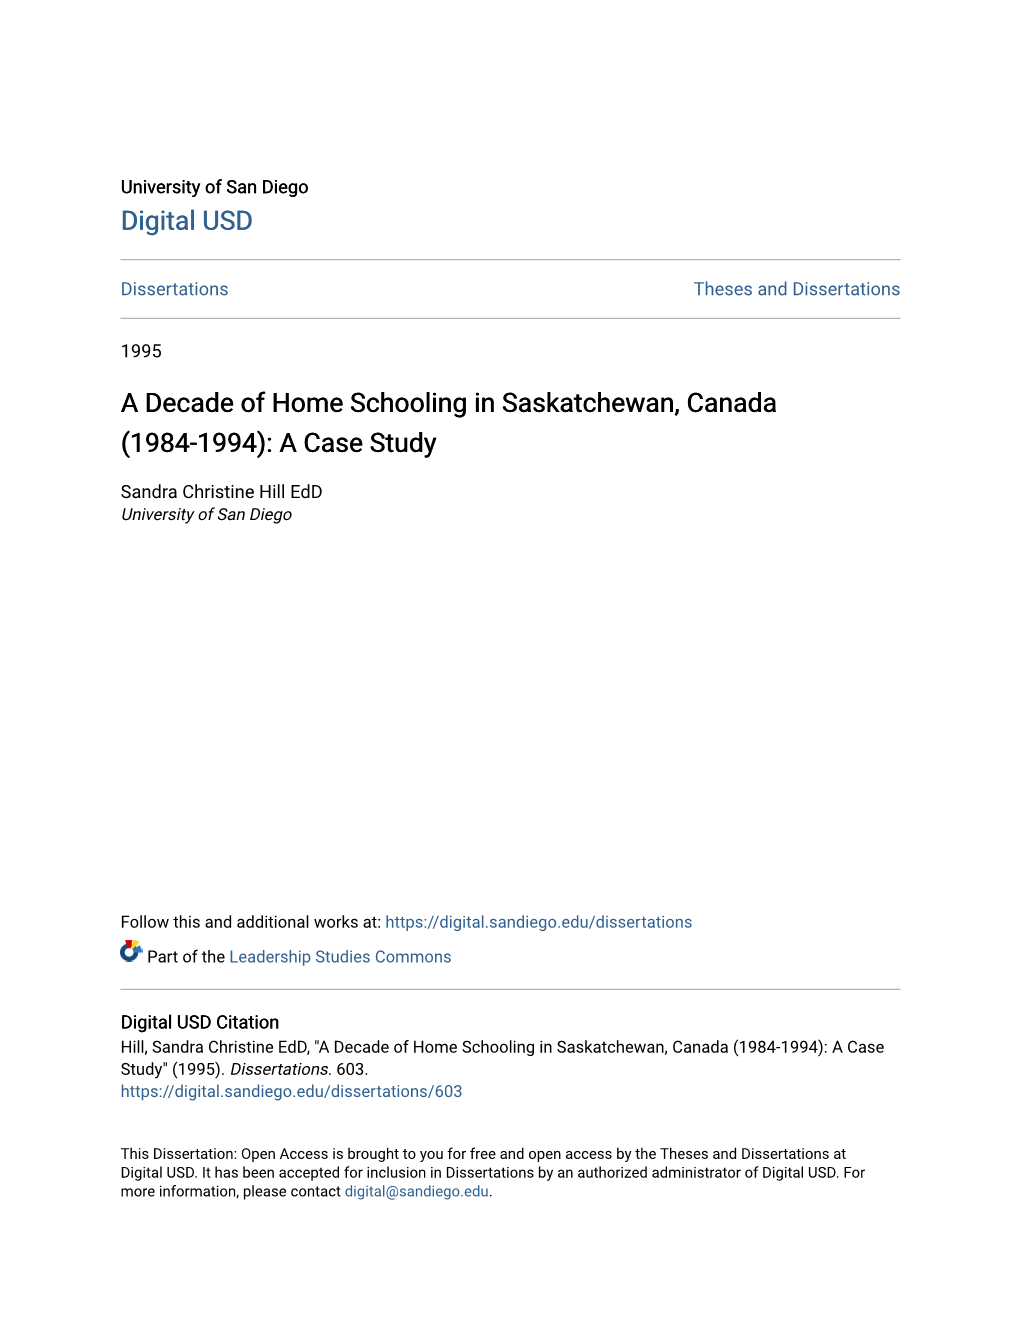 A Decade of Home Schooling in Saskatchewan, Canada (1984-1994): a Case Study